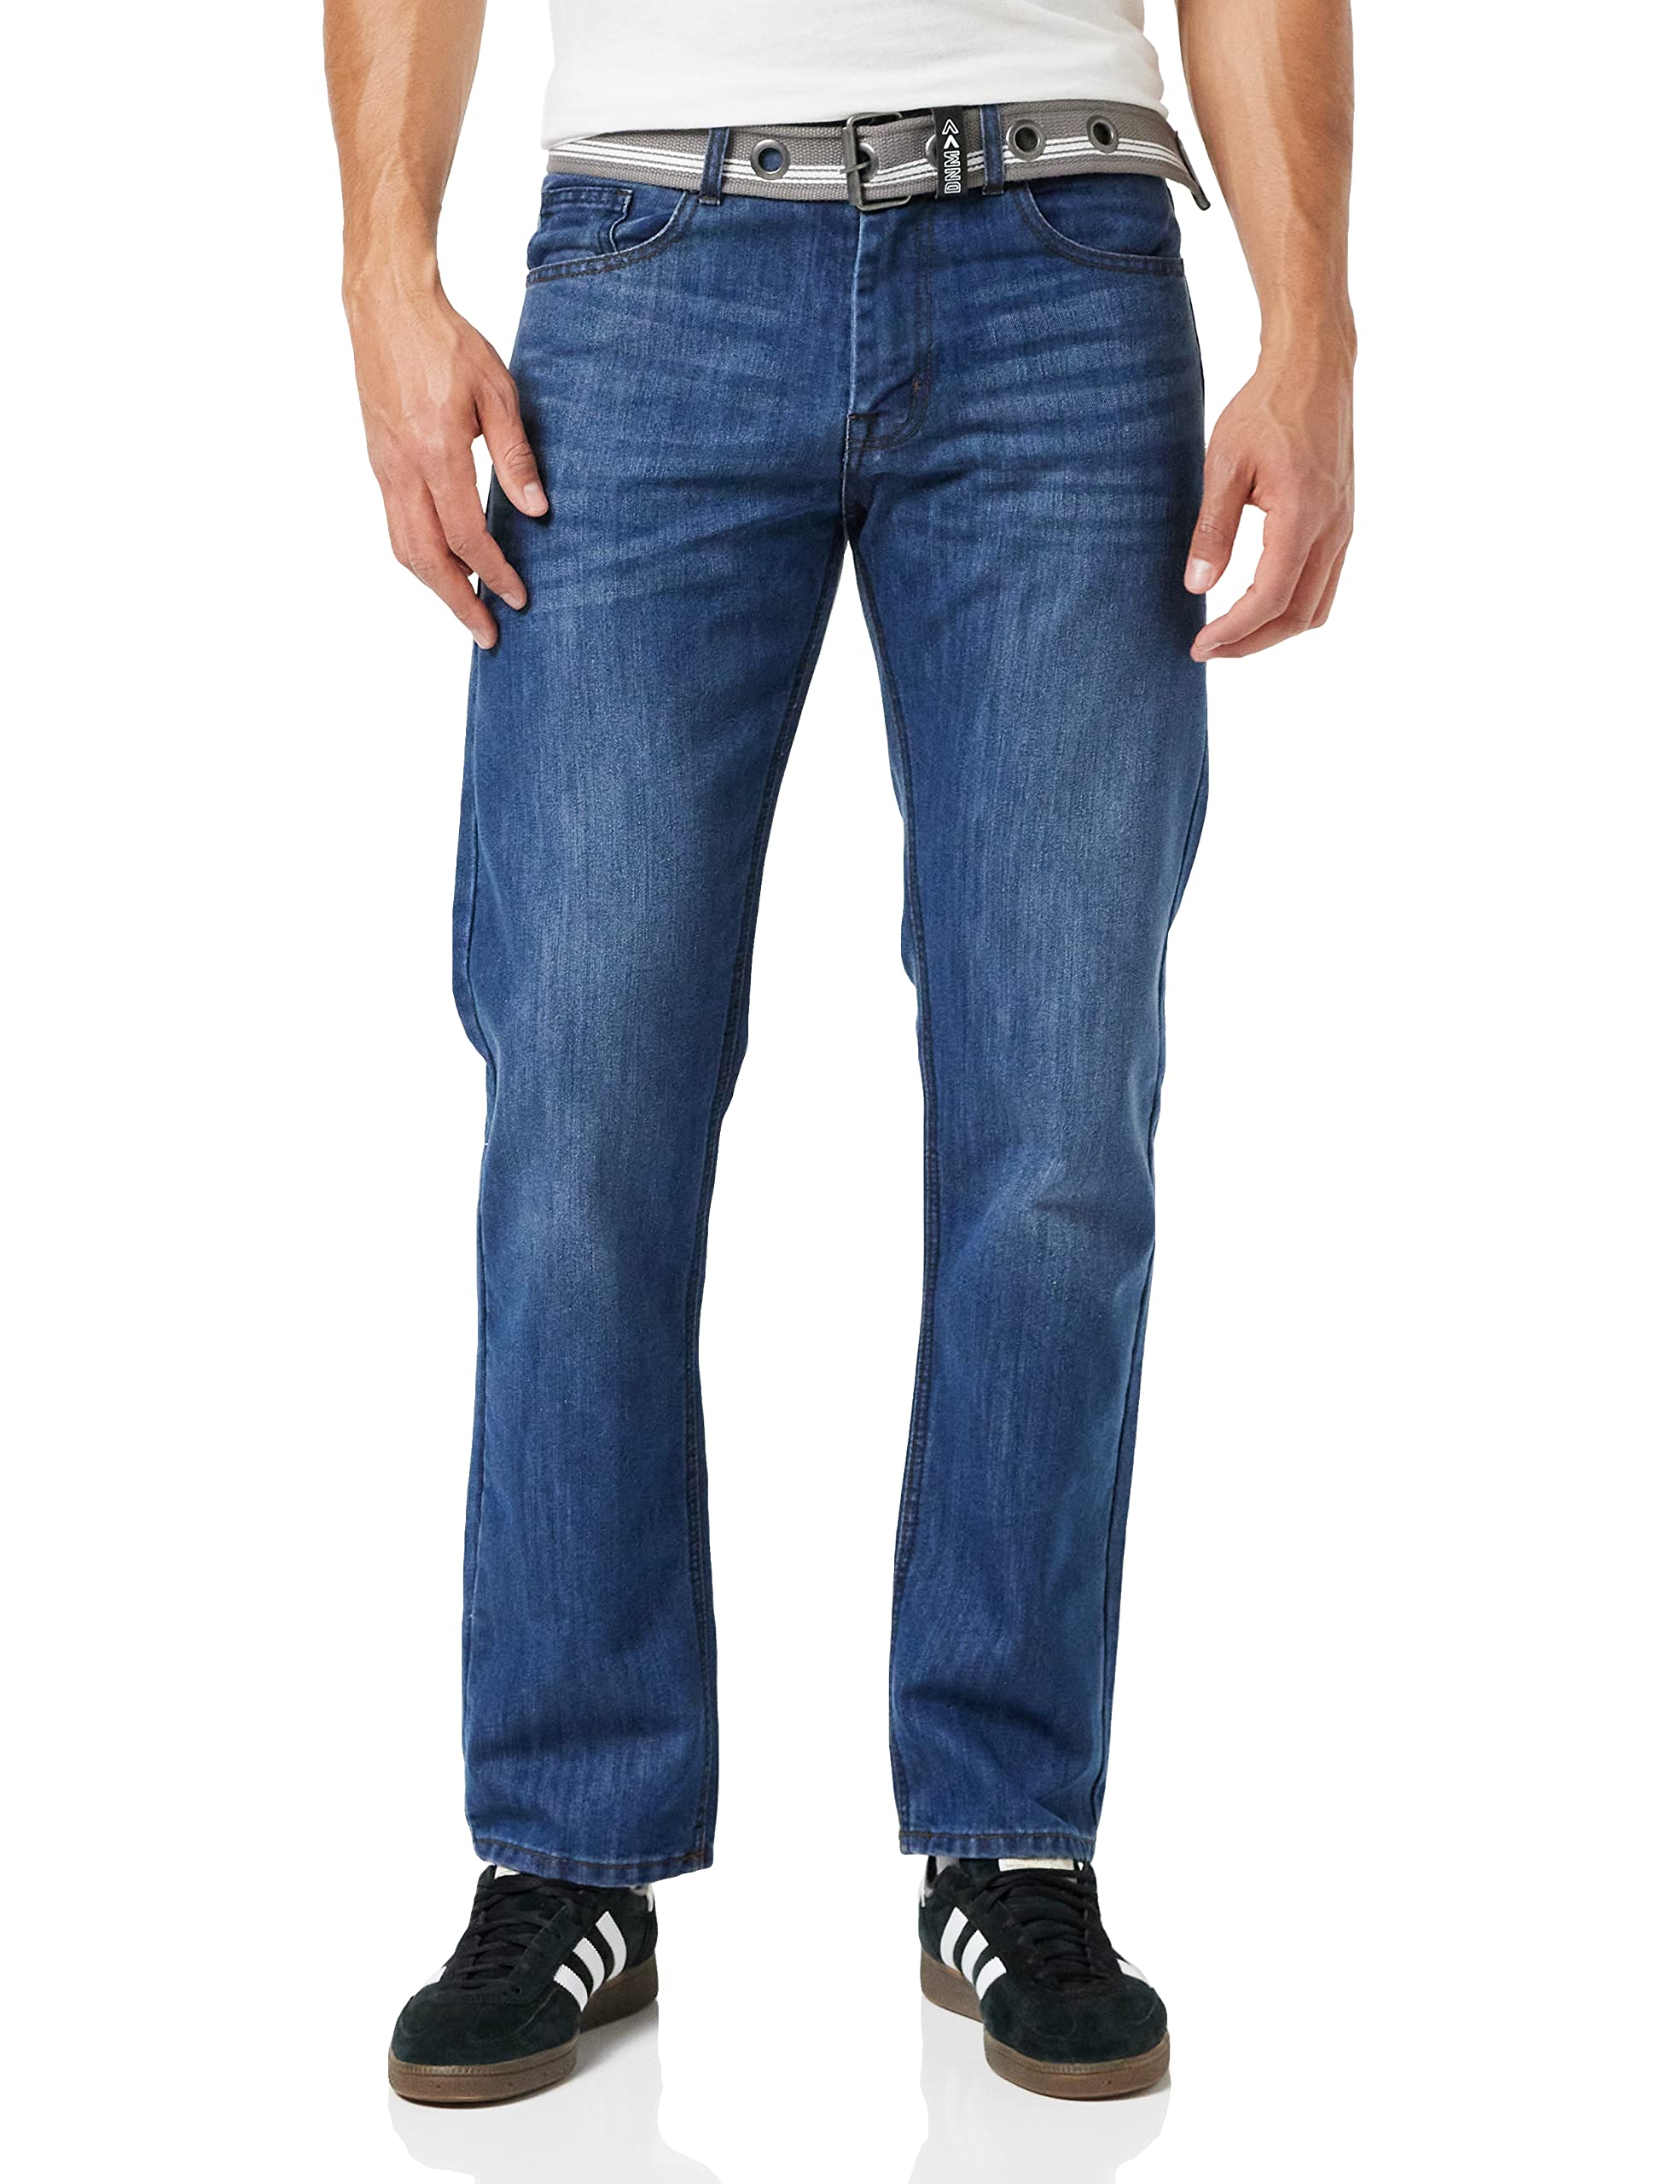 Enzo Herren EZ324 Straight Jeans, Blue (Midwash), W48/L30 (Size:48 S)